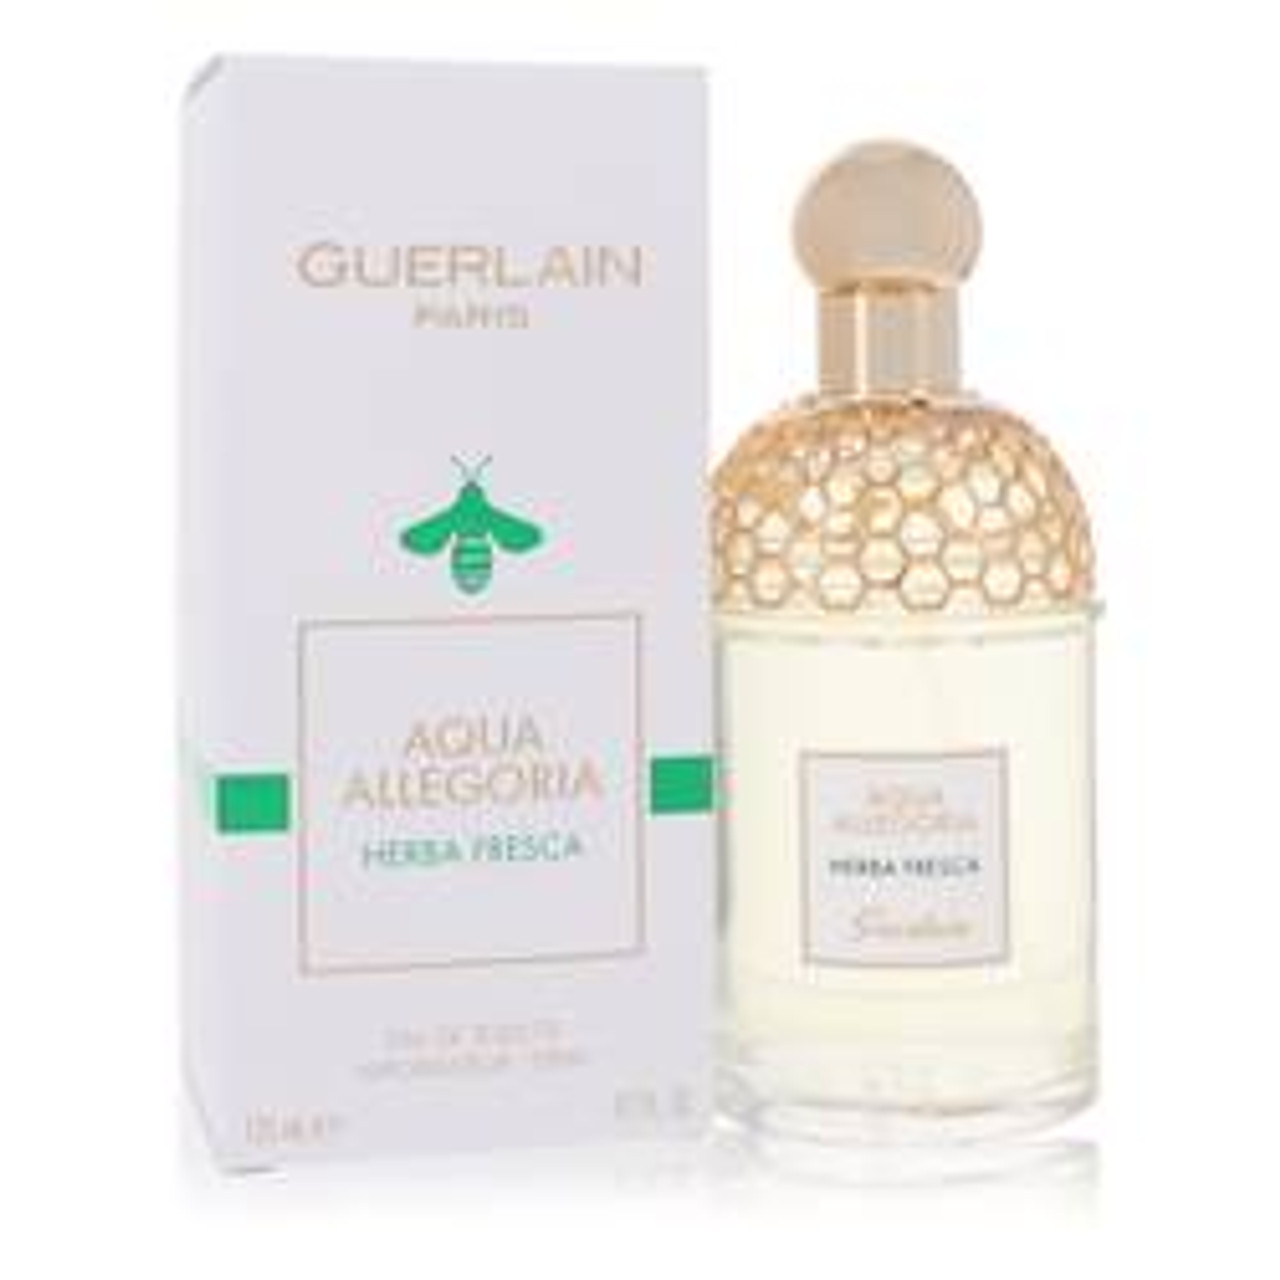 Aqua Allegoria Herba Fresca Perfume By Guerlain Eau De Toilette Spray (Unisex) 4.2 oz for Women - *Pre-Order